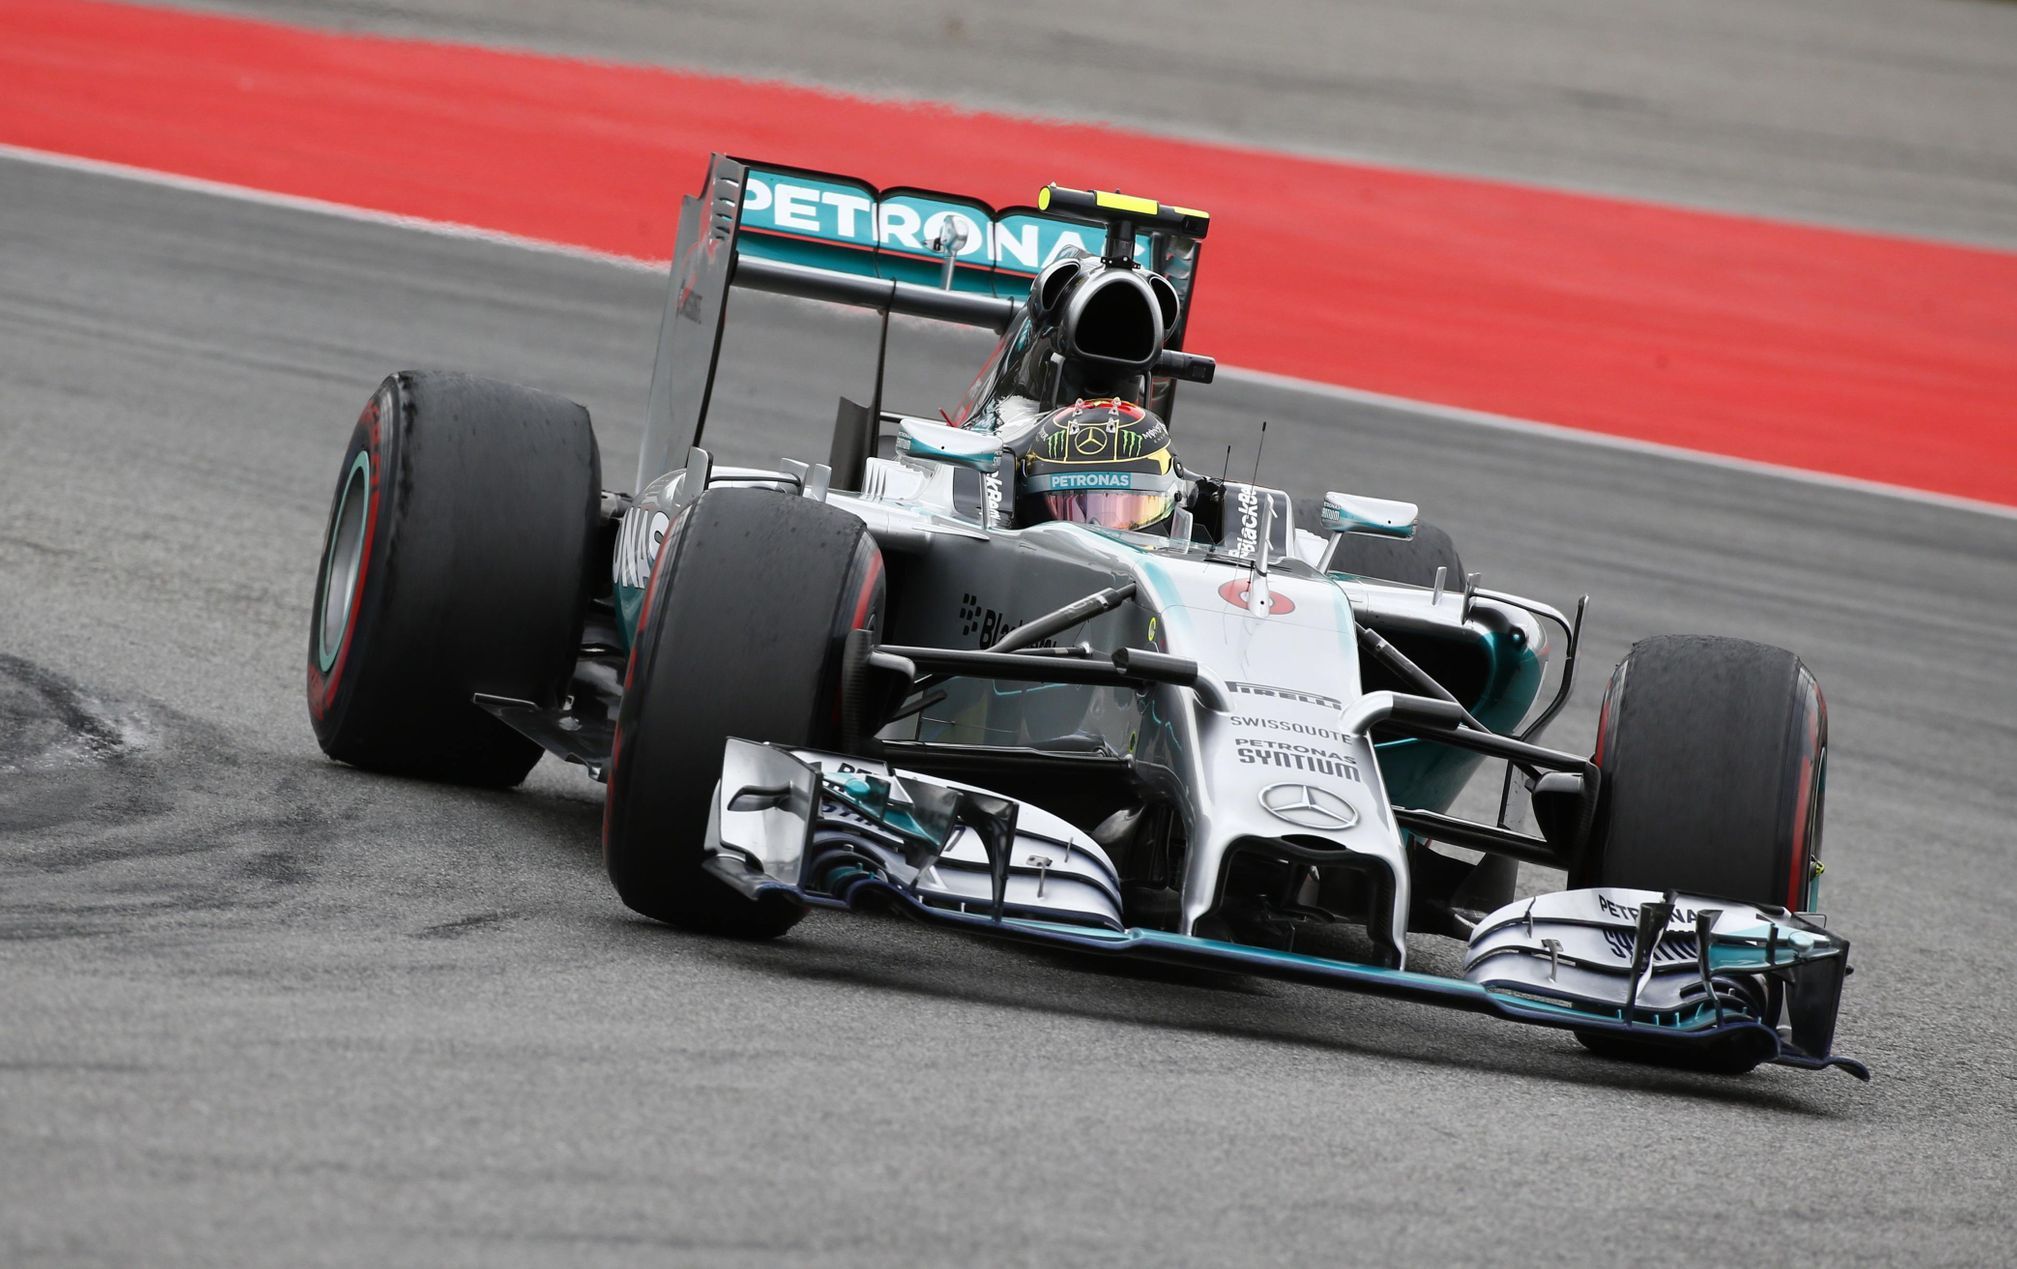 Mercedes Formula One driver Rosberg drives through corner during German F1 Grand Prix at Hockenheim